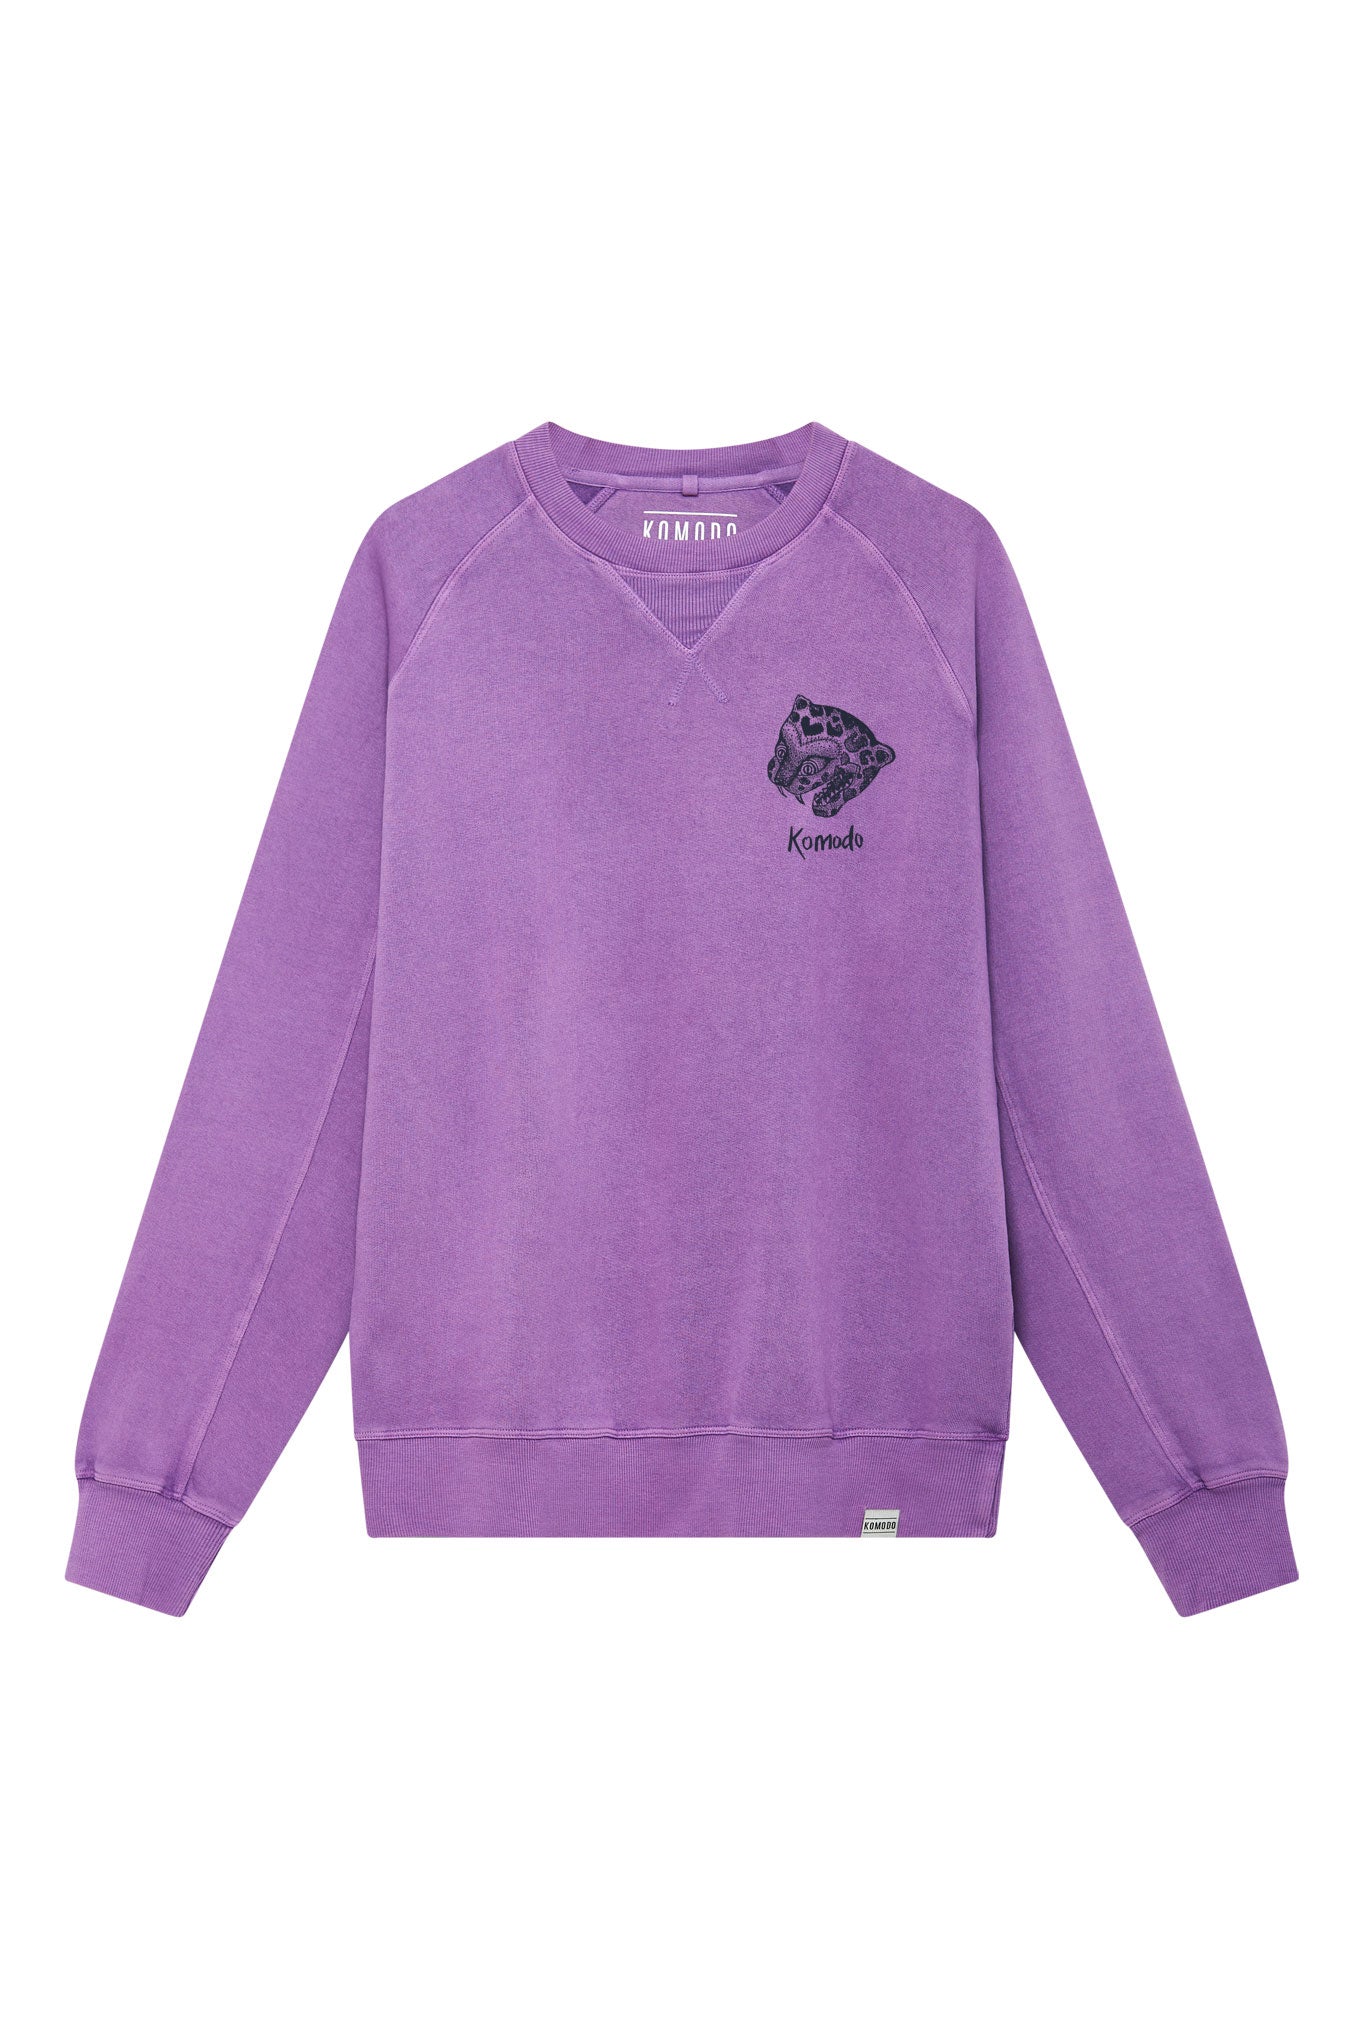 Purple, long-sleeved sweater NEPALI LEOPARD made from 100% organic cotton by Komodo